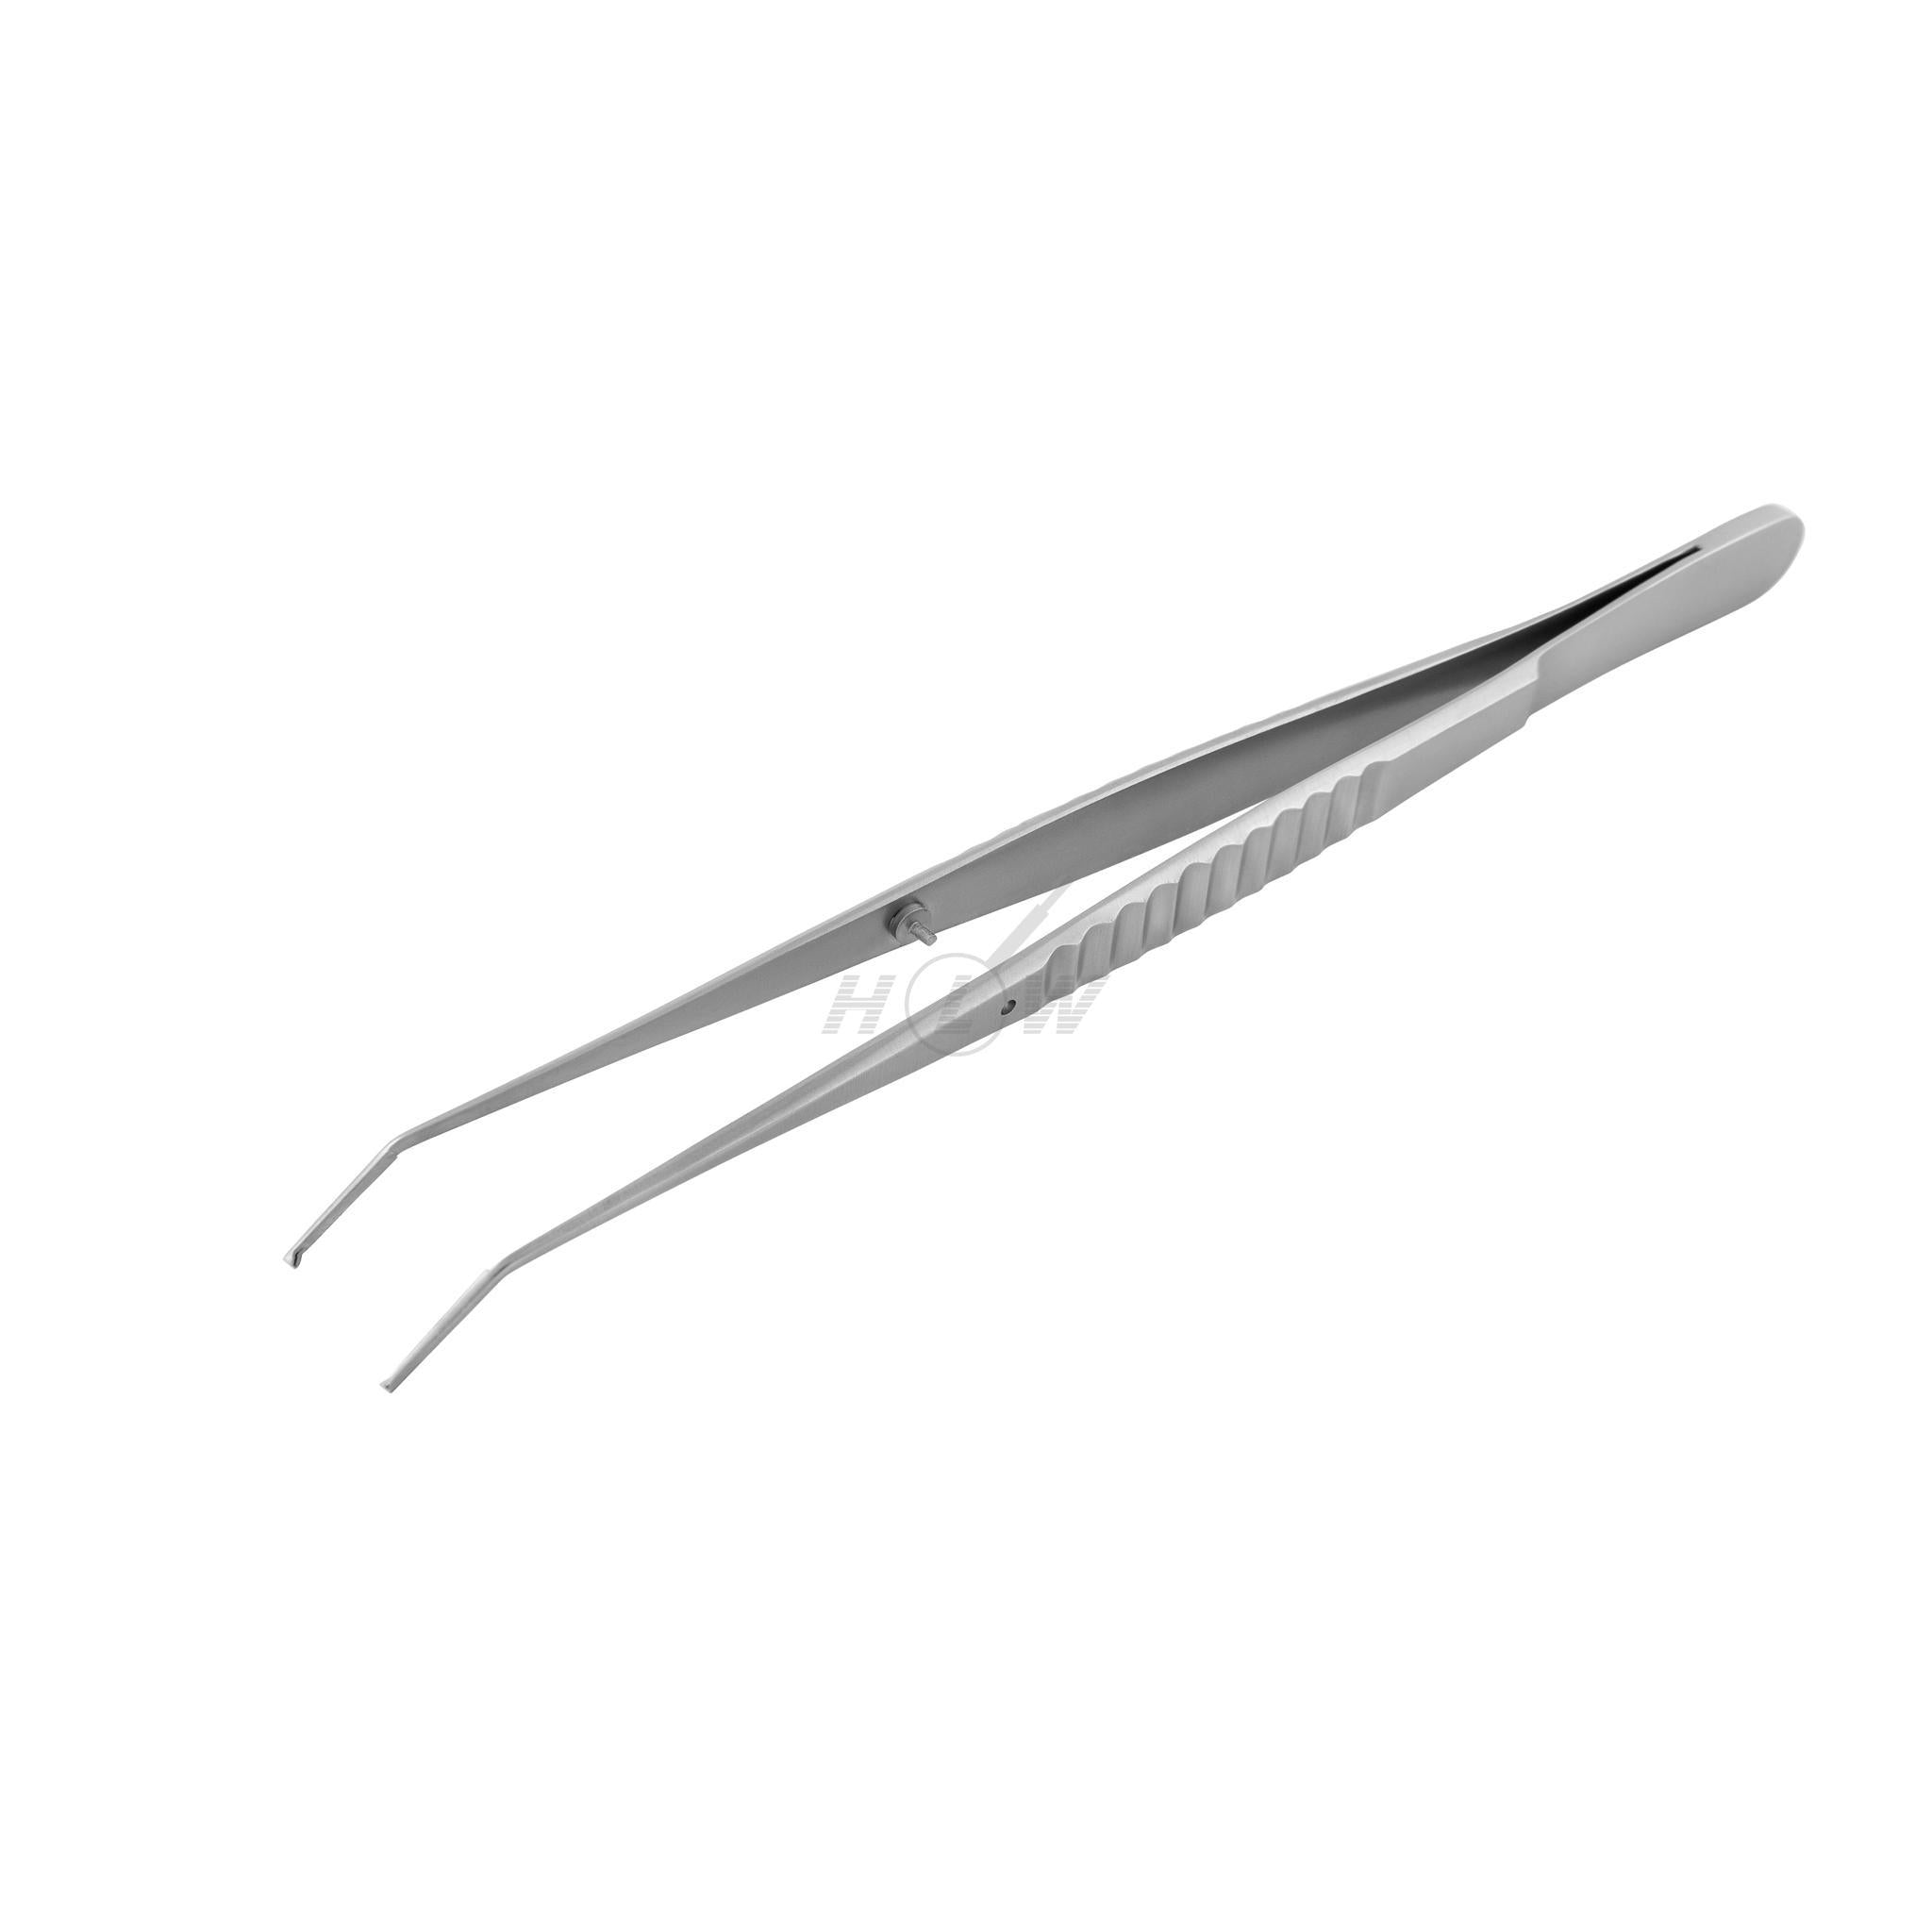 Microsurgical tweezers